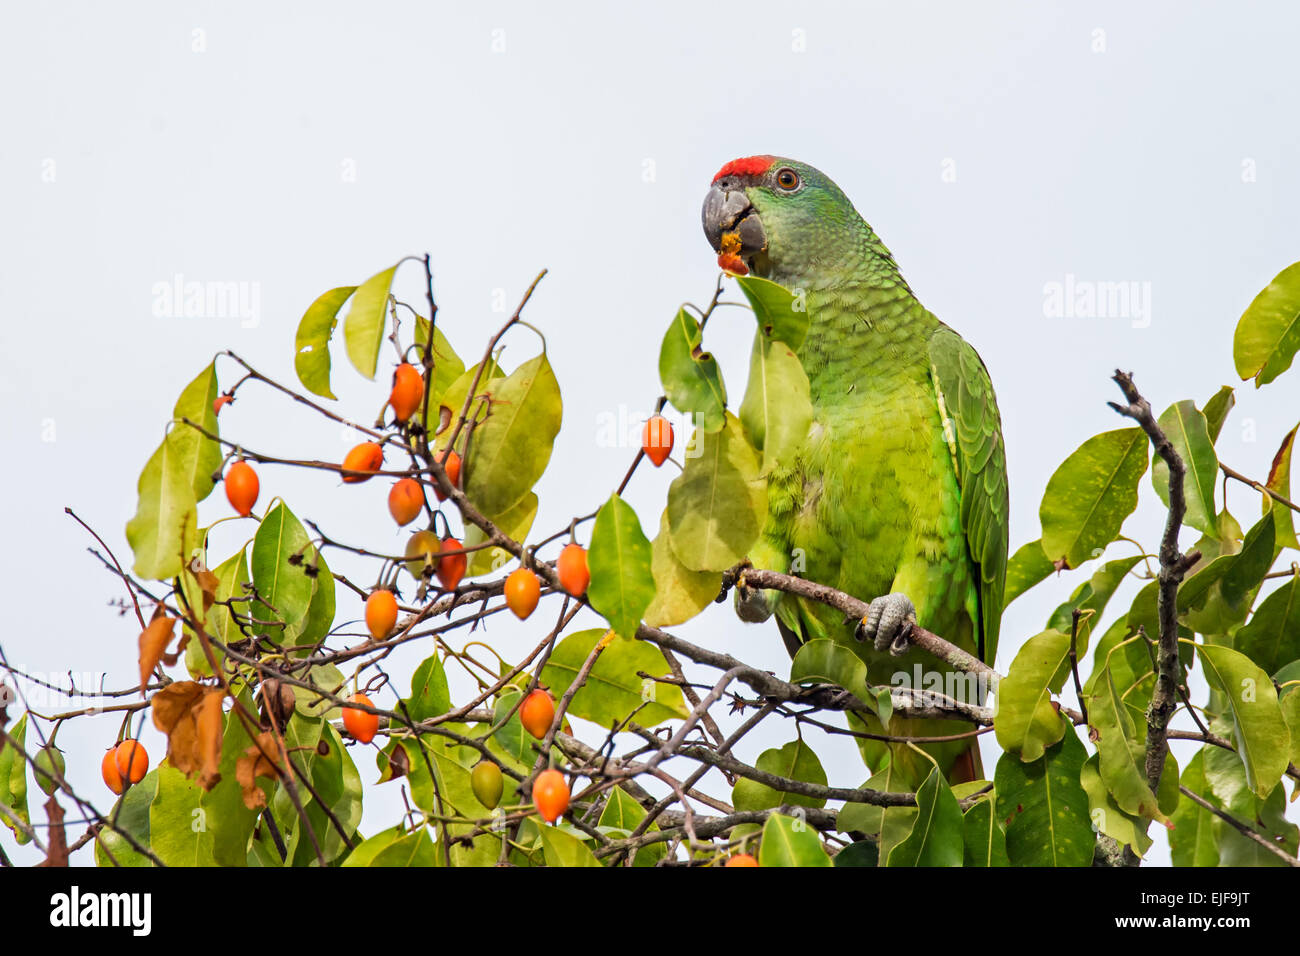 Festive Amazon (Amazona festiva) or Festive Parrot feeding in Botanical Gardens, Georgetown, Guyana Stock Photo